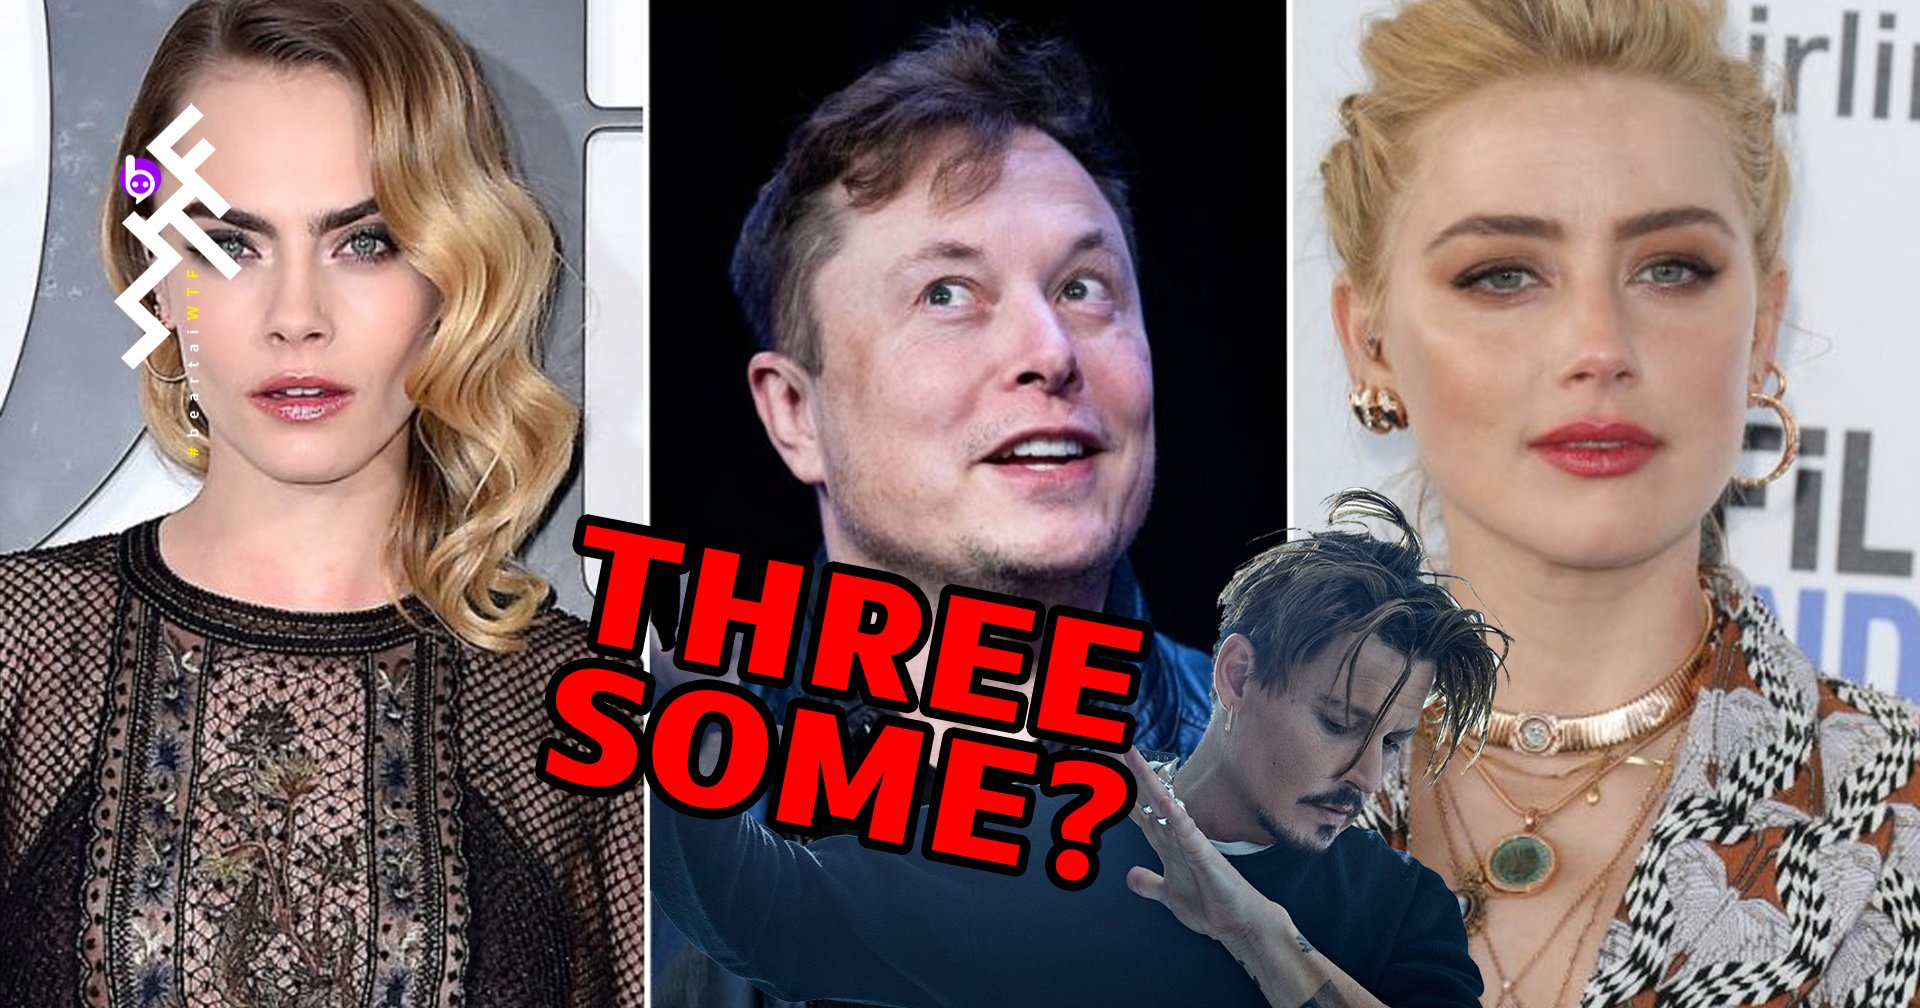 Elon Musk และ Amber Heard อาจเคยมี Cara Delevingne ร่วม “Threesome เราสามคน” ตอนคบซ้อน Johnny Depp